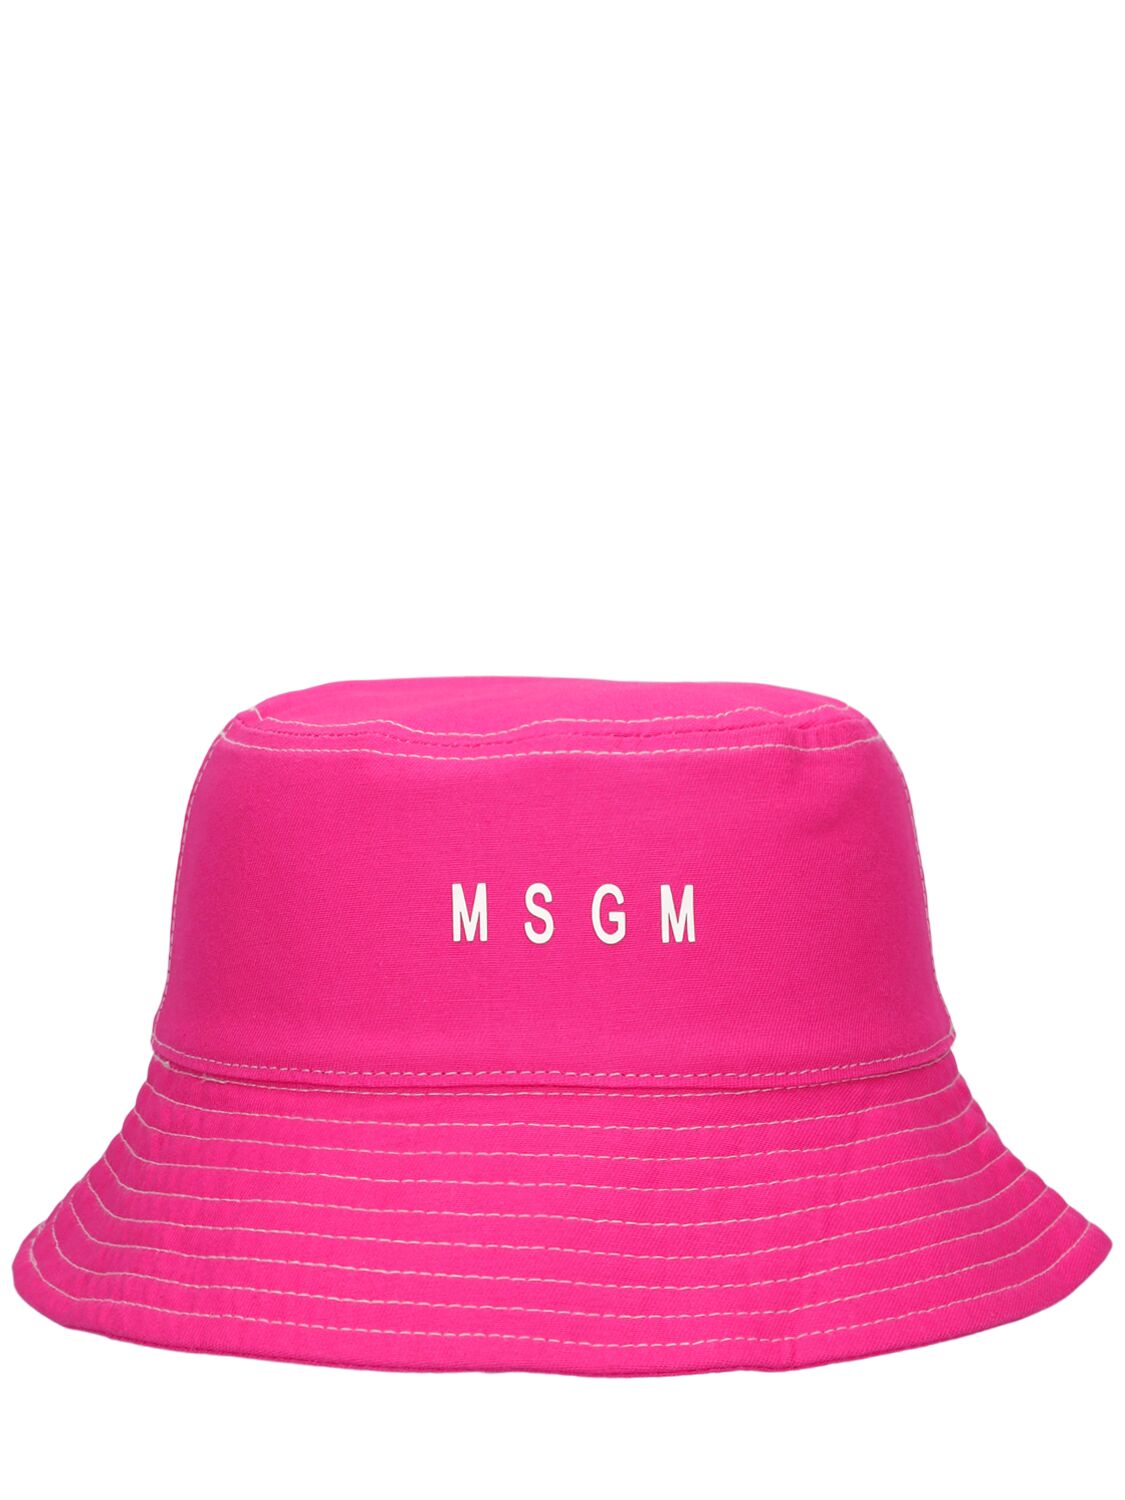 Msgm Kids' Cloche Bucket Hat In Fuchsia